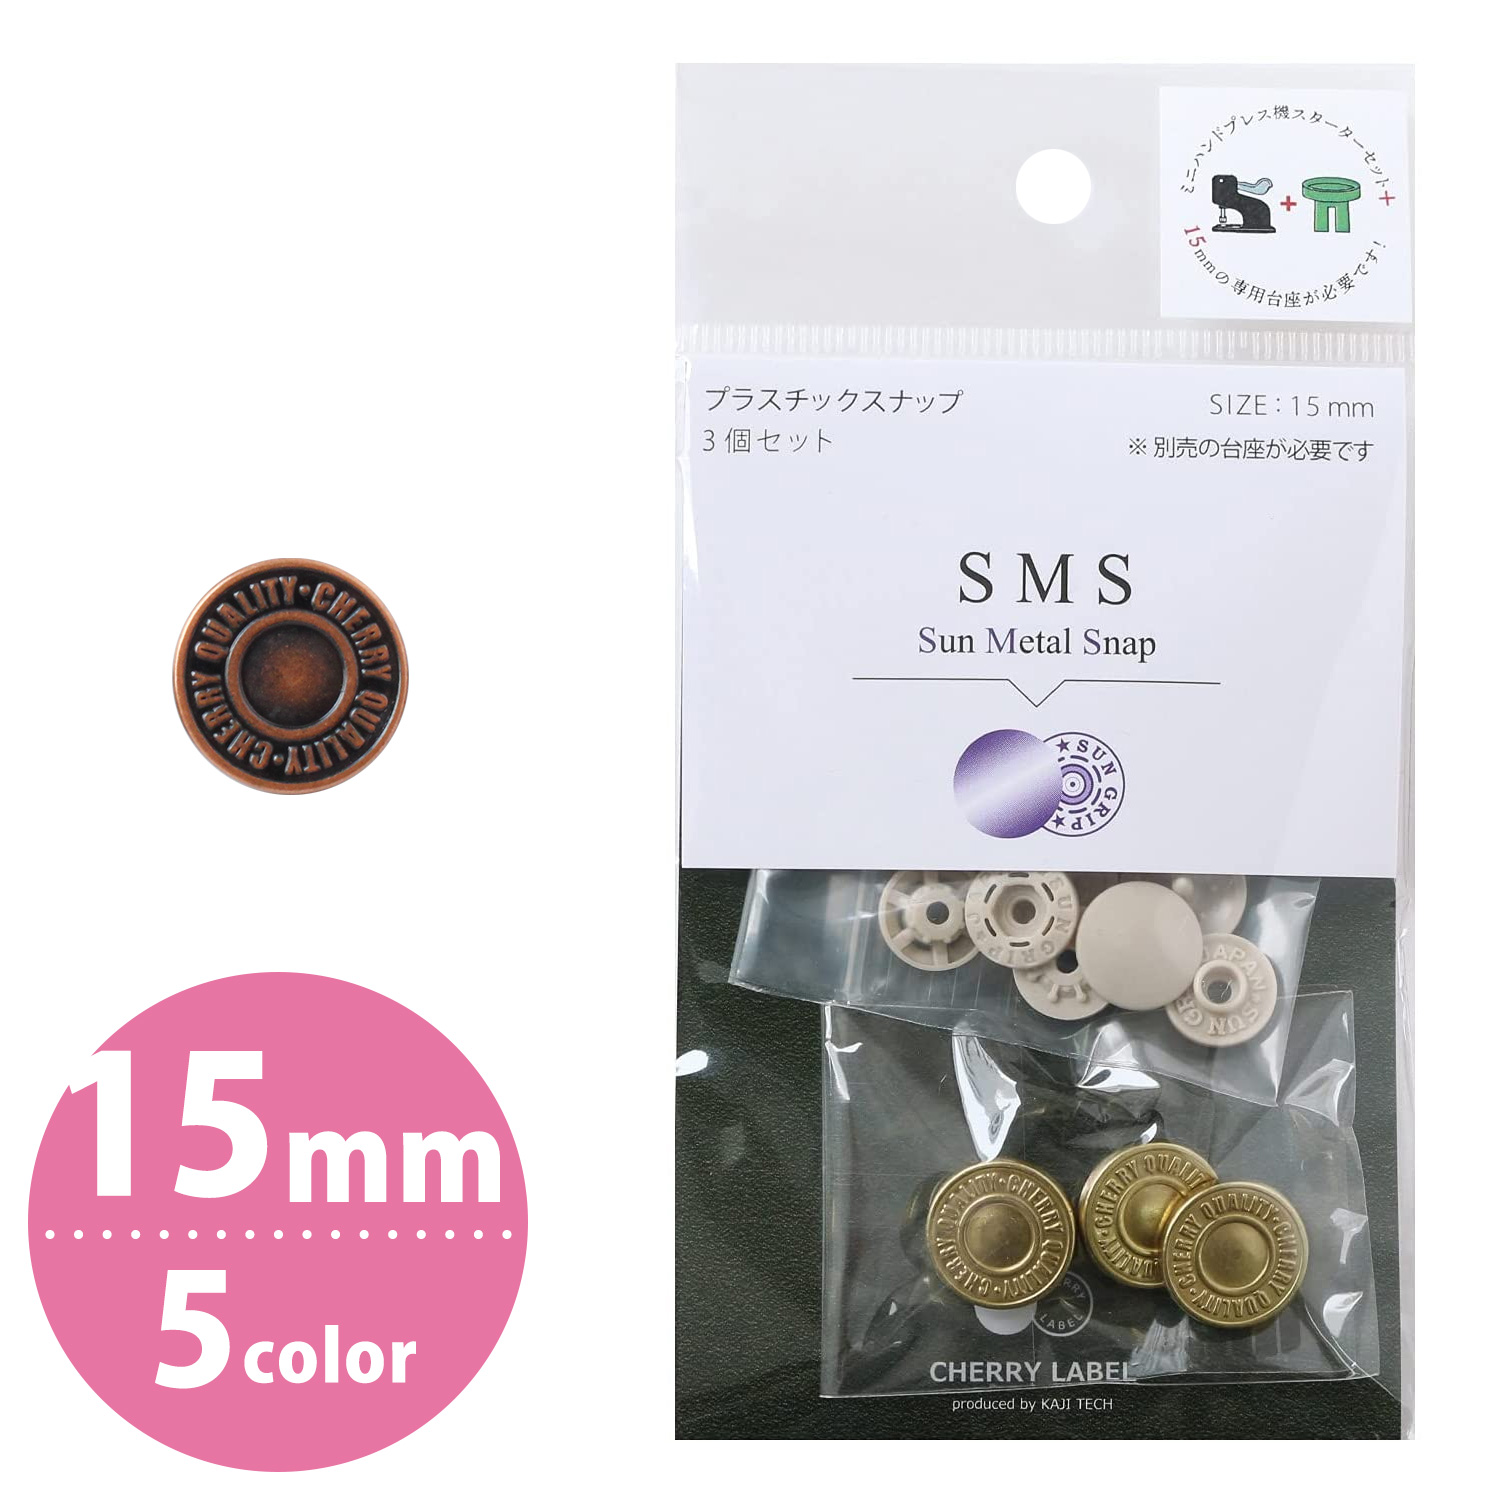 SMS15 SUN METAL SNAP メタル風スナップ type1 15mm (袋)